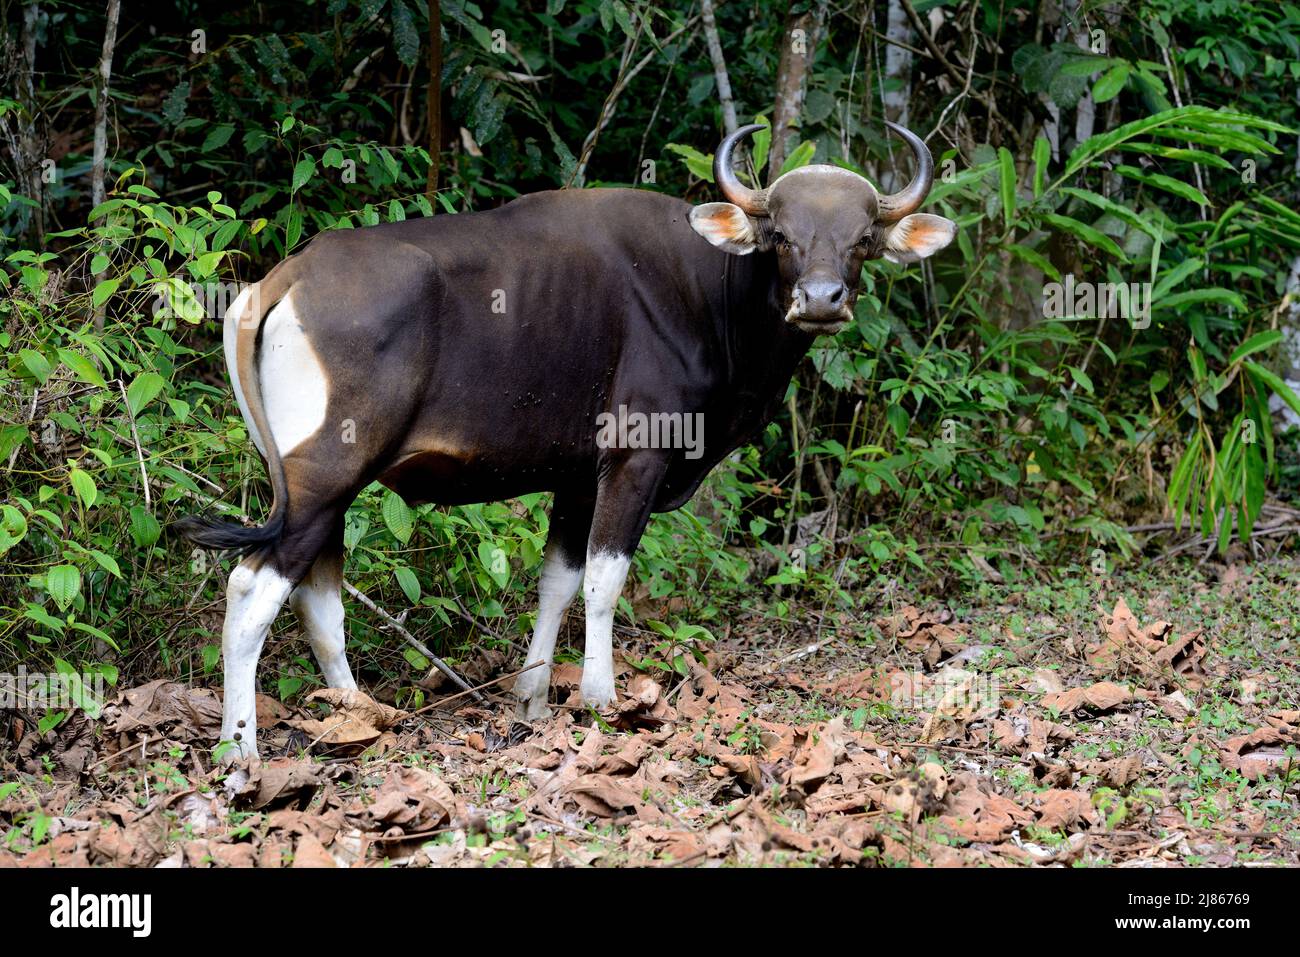 Banteng in forest - Taman Negara Malaysia ; Species extinct in peninsular Malaysia since 1950. Reintroduced animals. Stock Photo